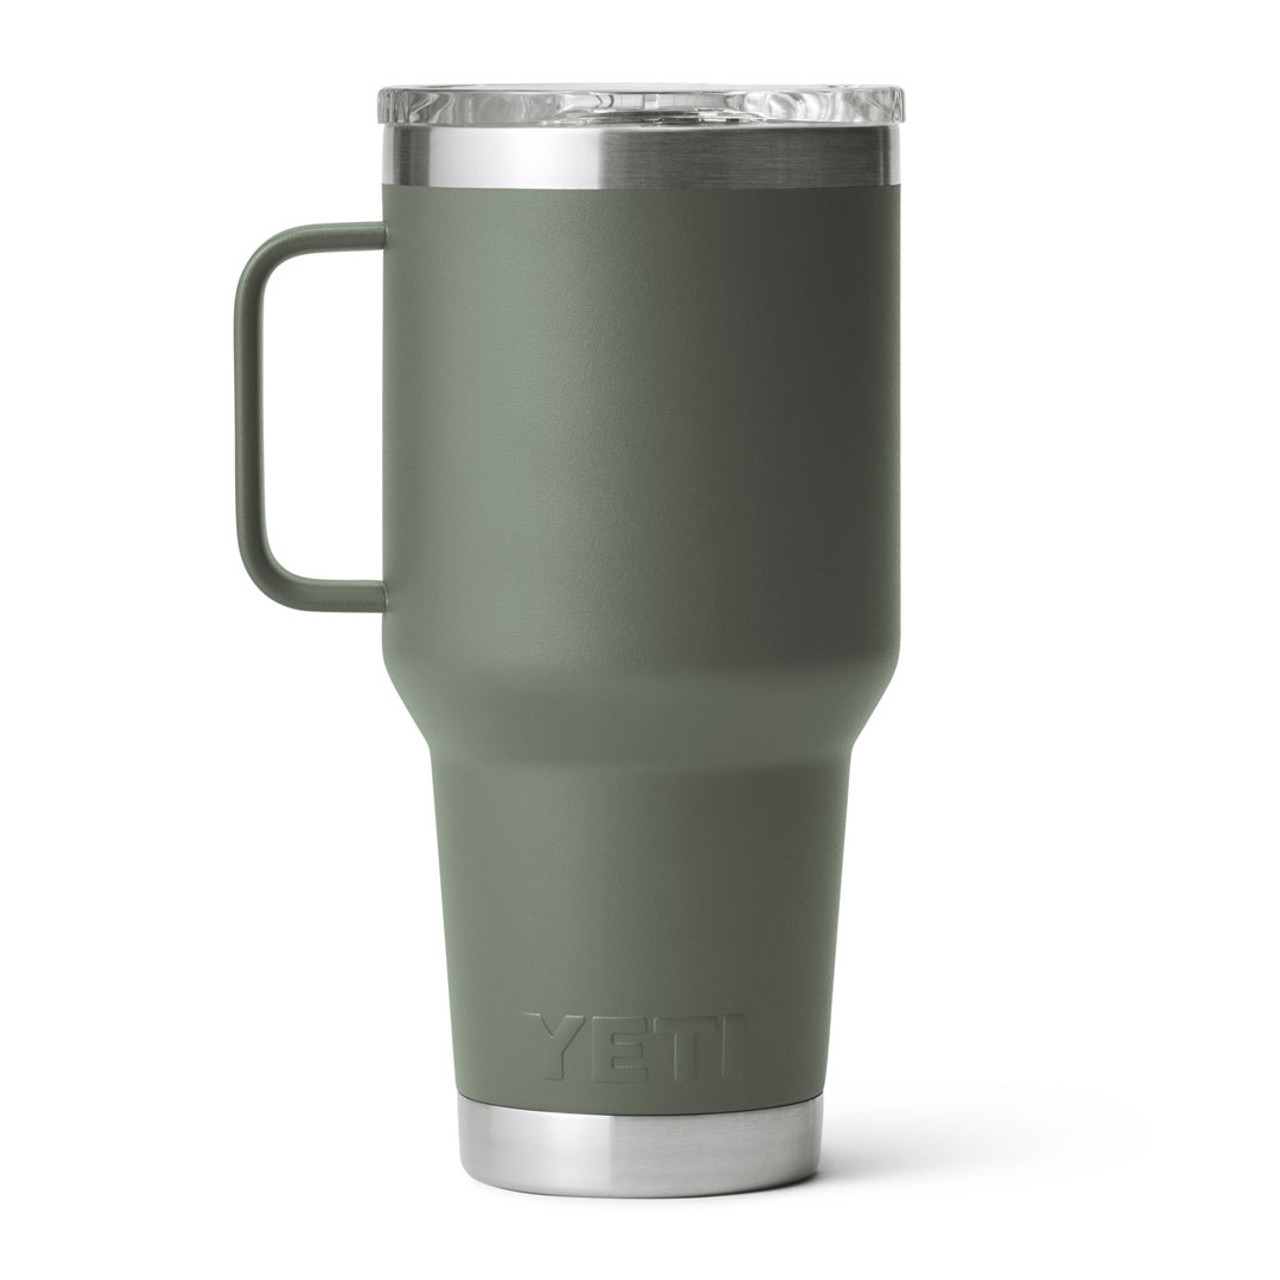 Yeti Rambler 30 oz. Travel Mug - Camp Green